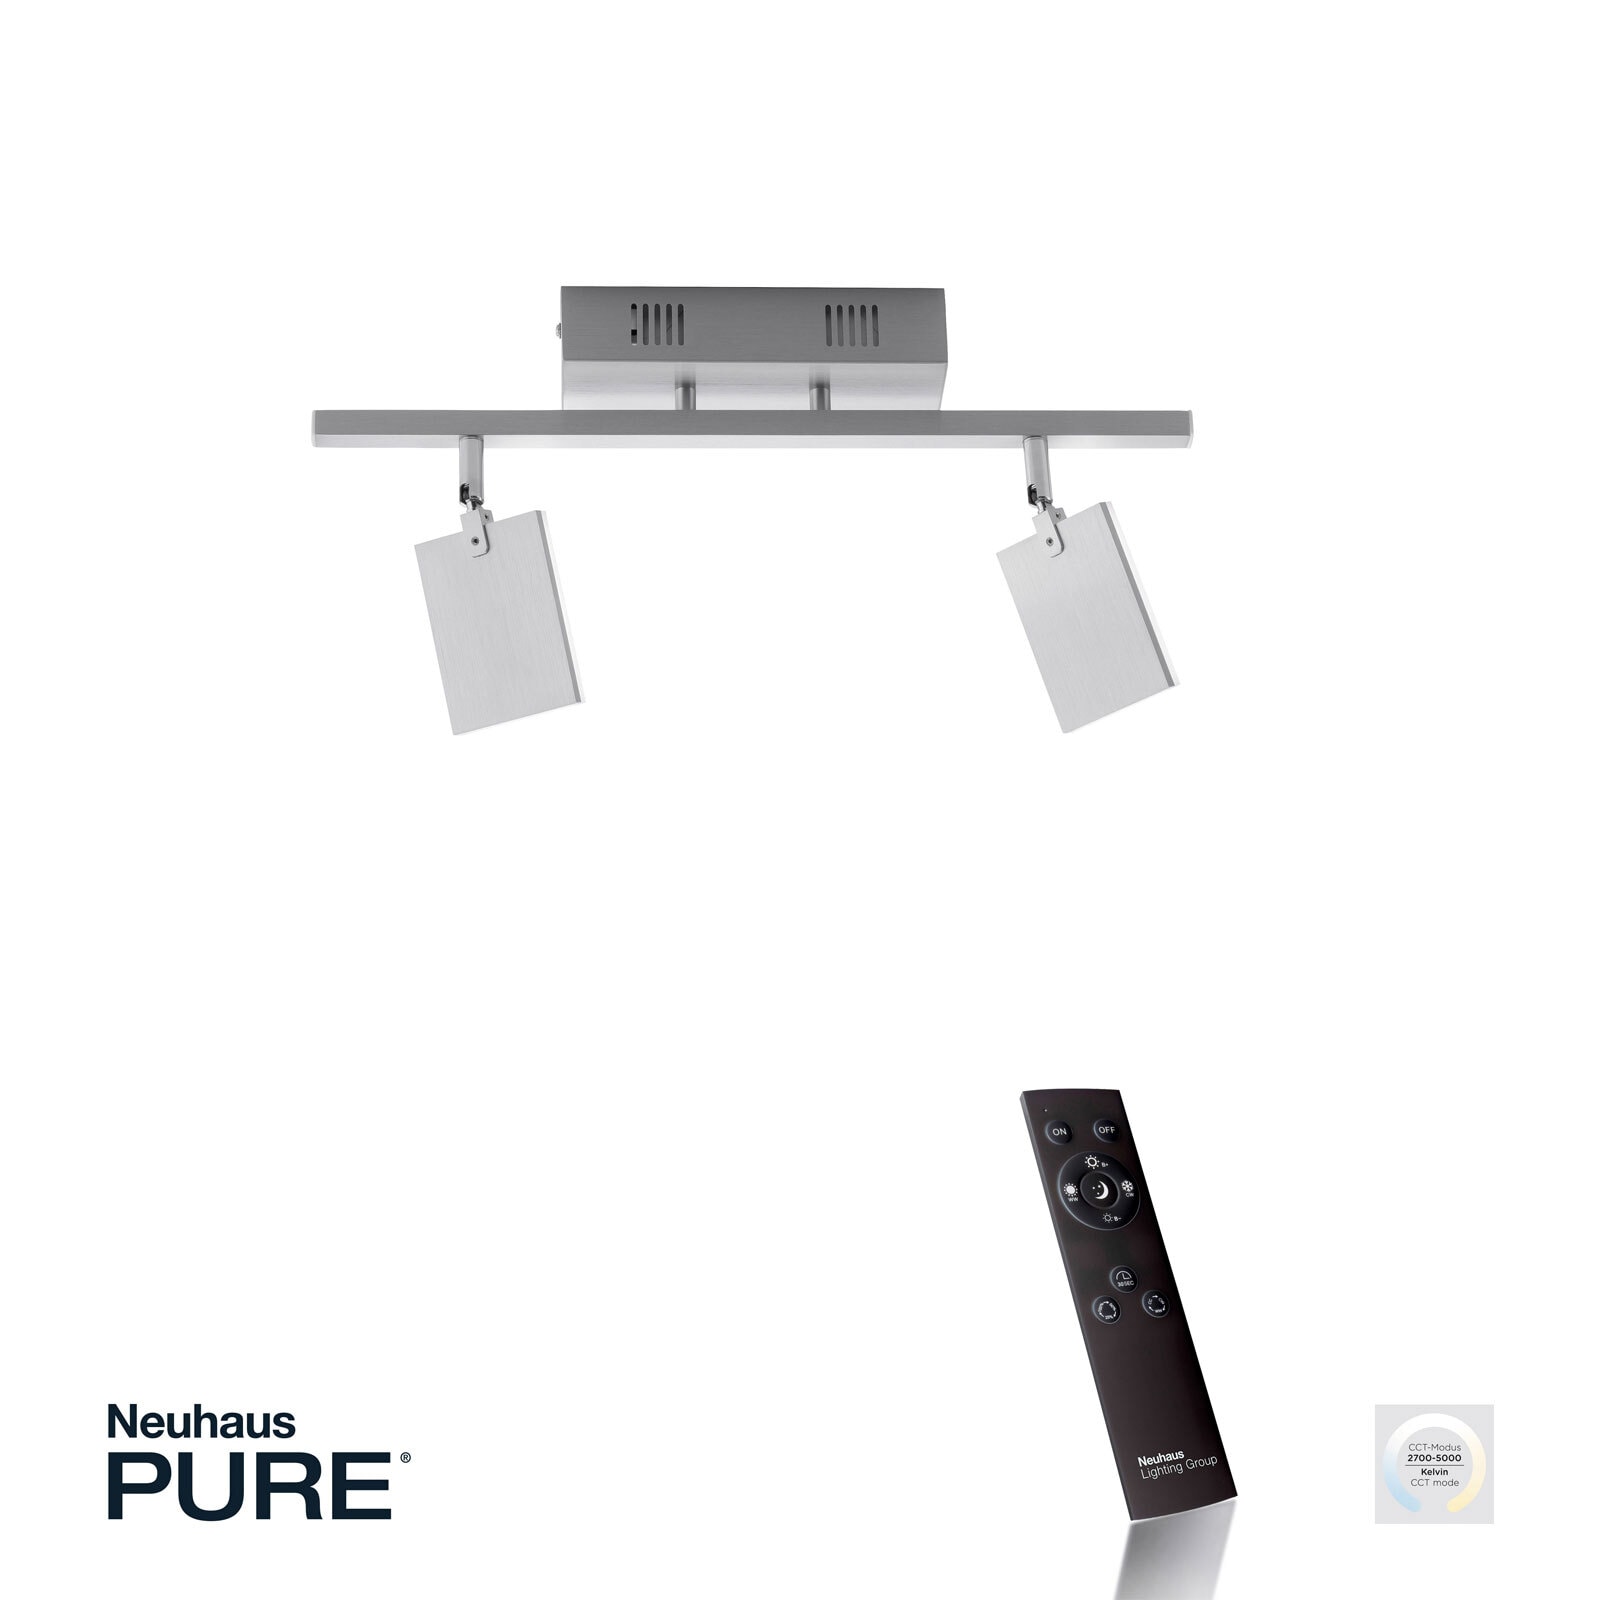 Paul Neuhaus LED Deckenlampe mit 2 Spots PURE-MIRA alufarbig